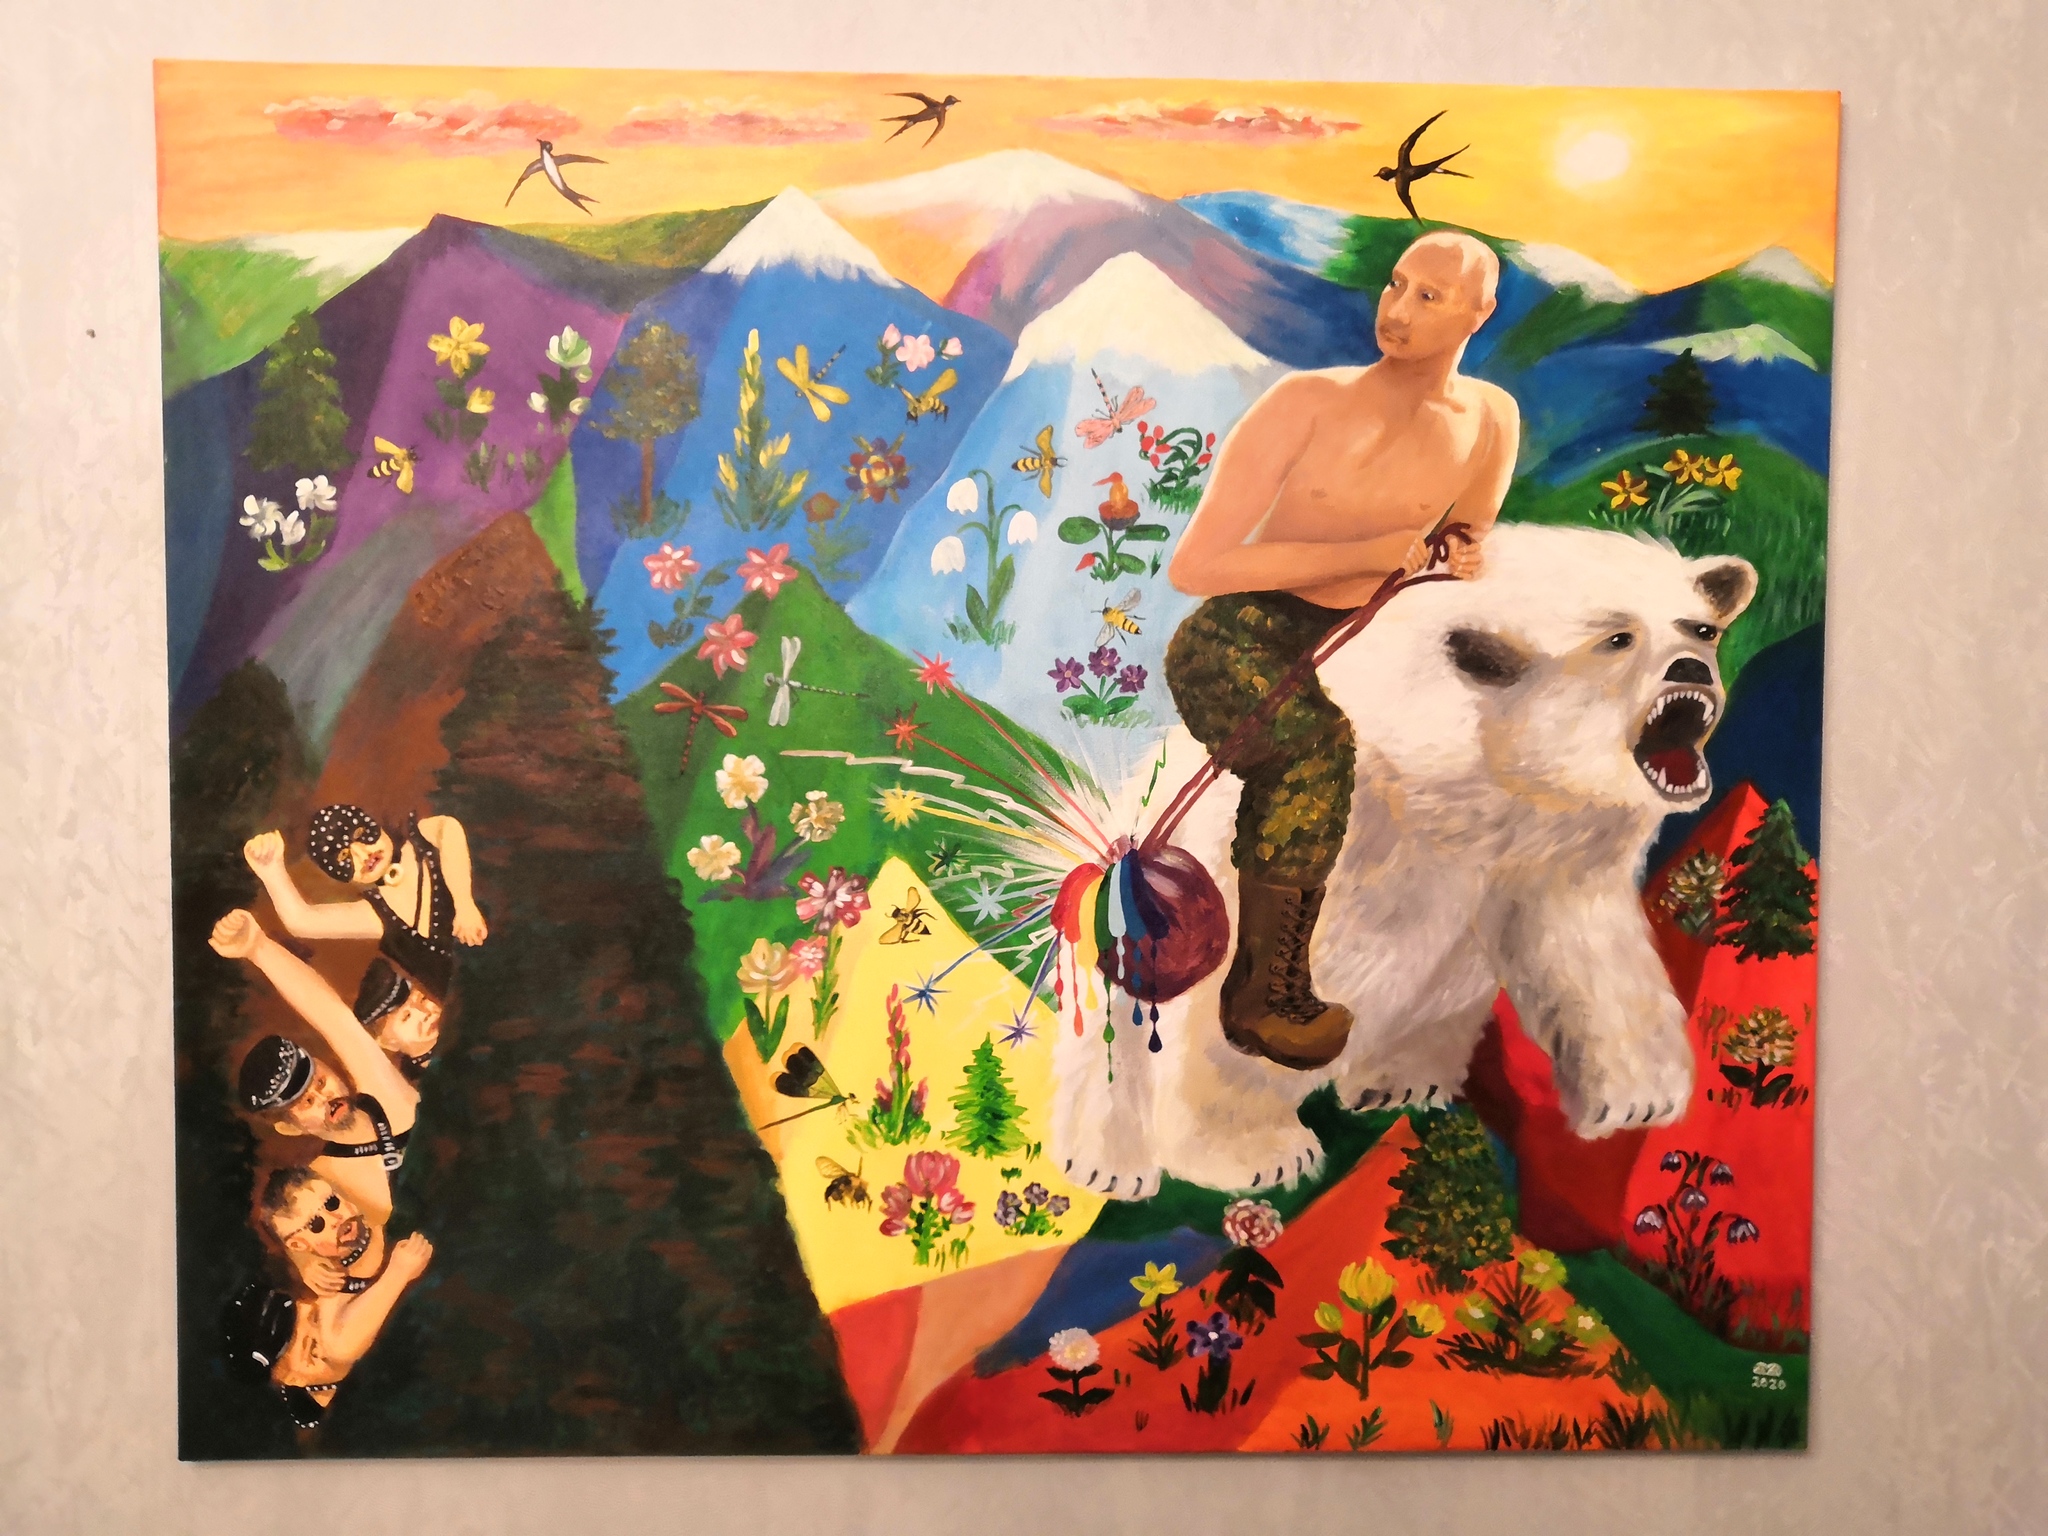 Putin steals the rainbow from fagots. 120x100 canvas, acrylic - My, Victor Pelevin, Vladimir Putin, Painting, Mat, Iphuck 10, Fresco, Rainbow, LGBT, Abduction